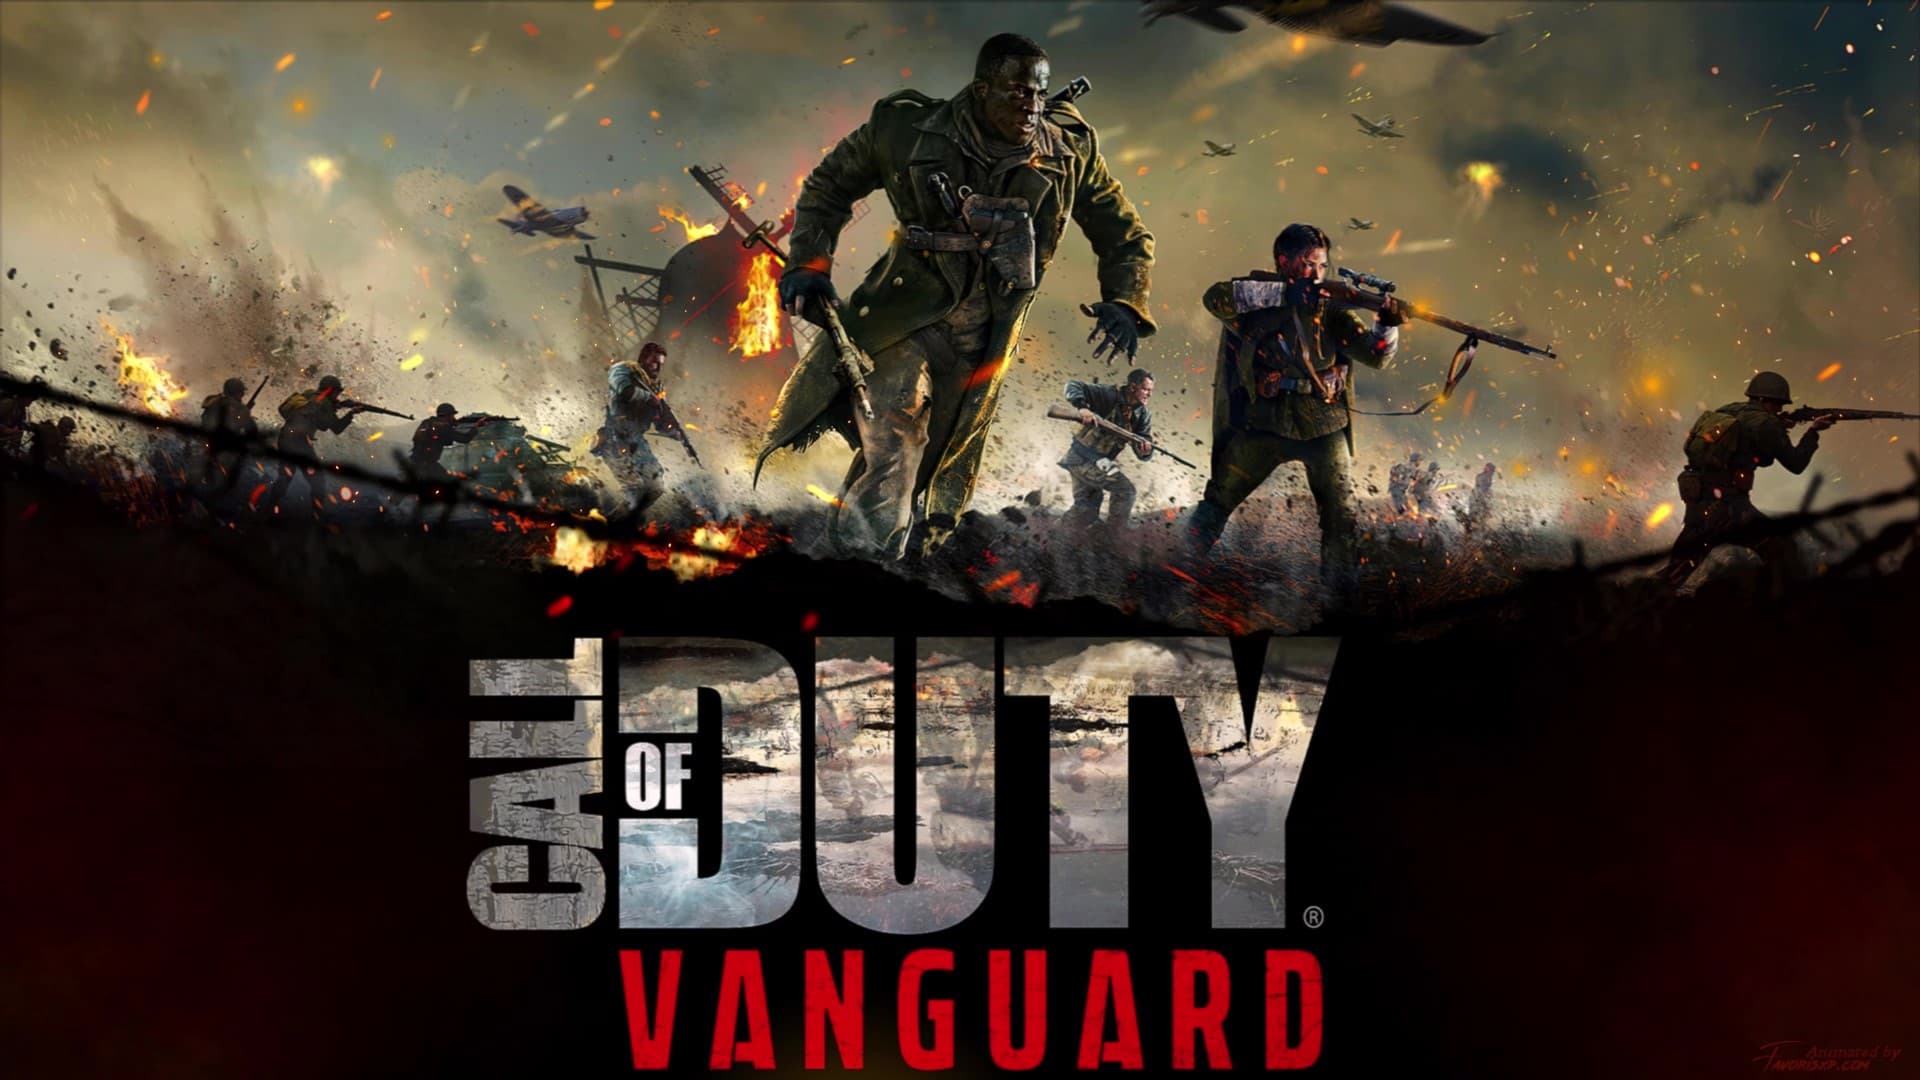 Call of Duty: Vanguard Wallpapers